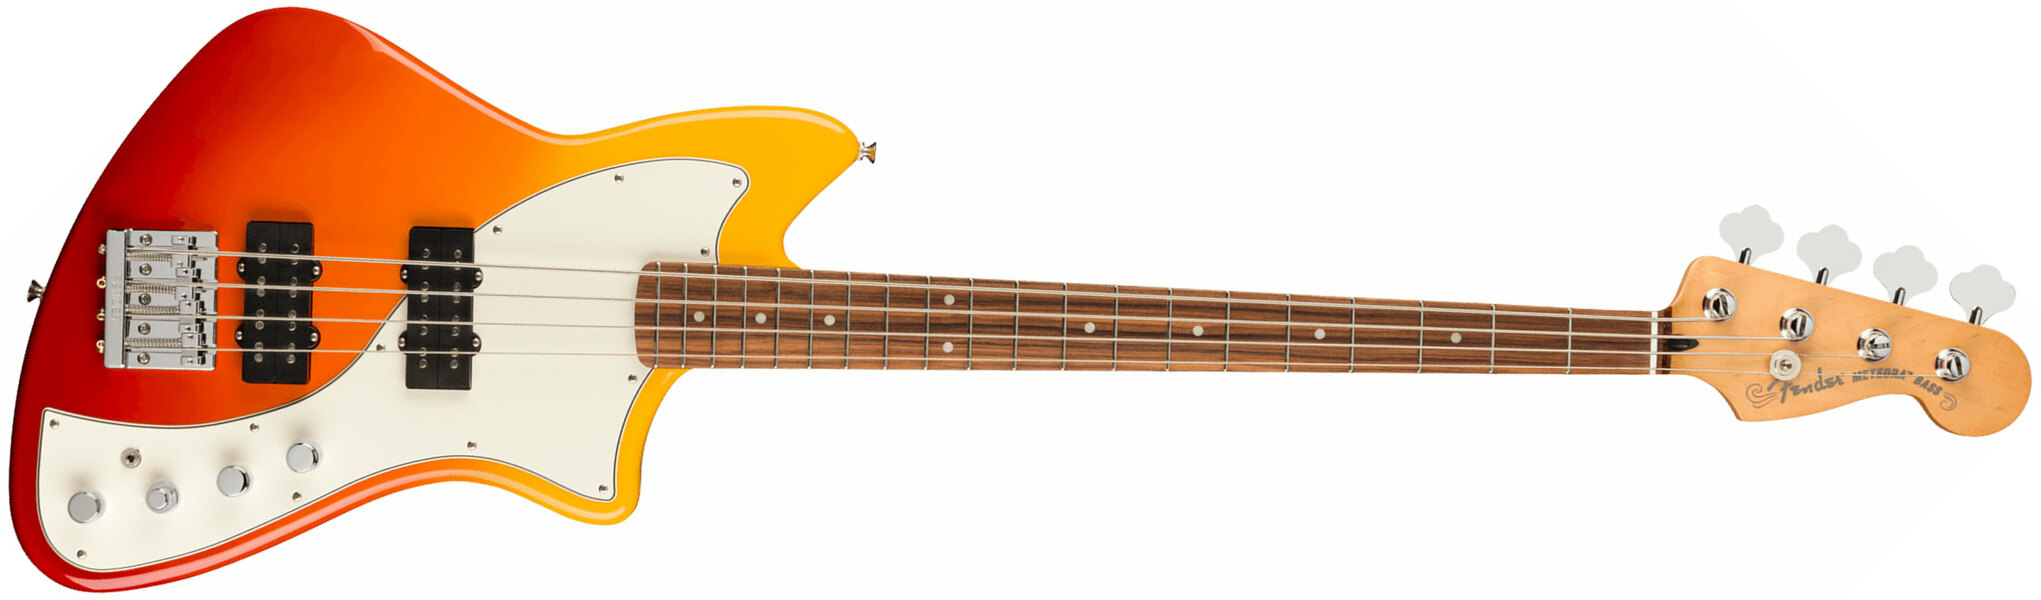 Fender Meteora Bass Active Player Plus Mex Pf - Tequila Sunrise - Bajo eléctrico de cuerpo sólido - Main picture